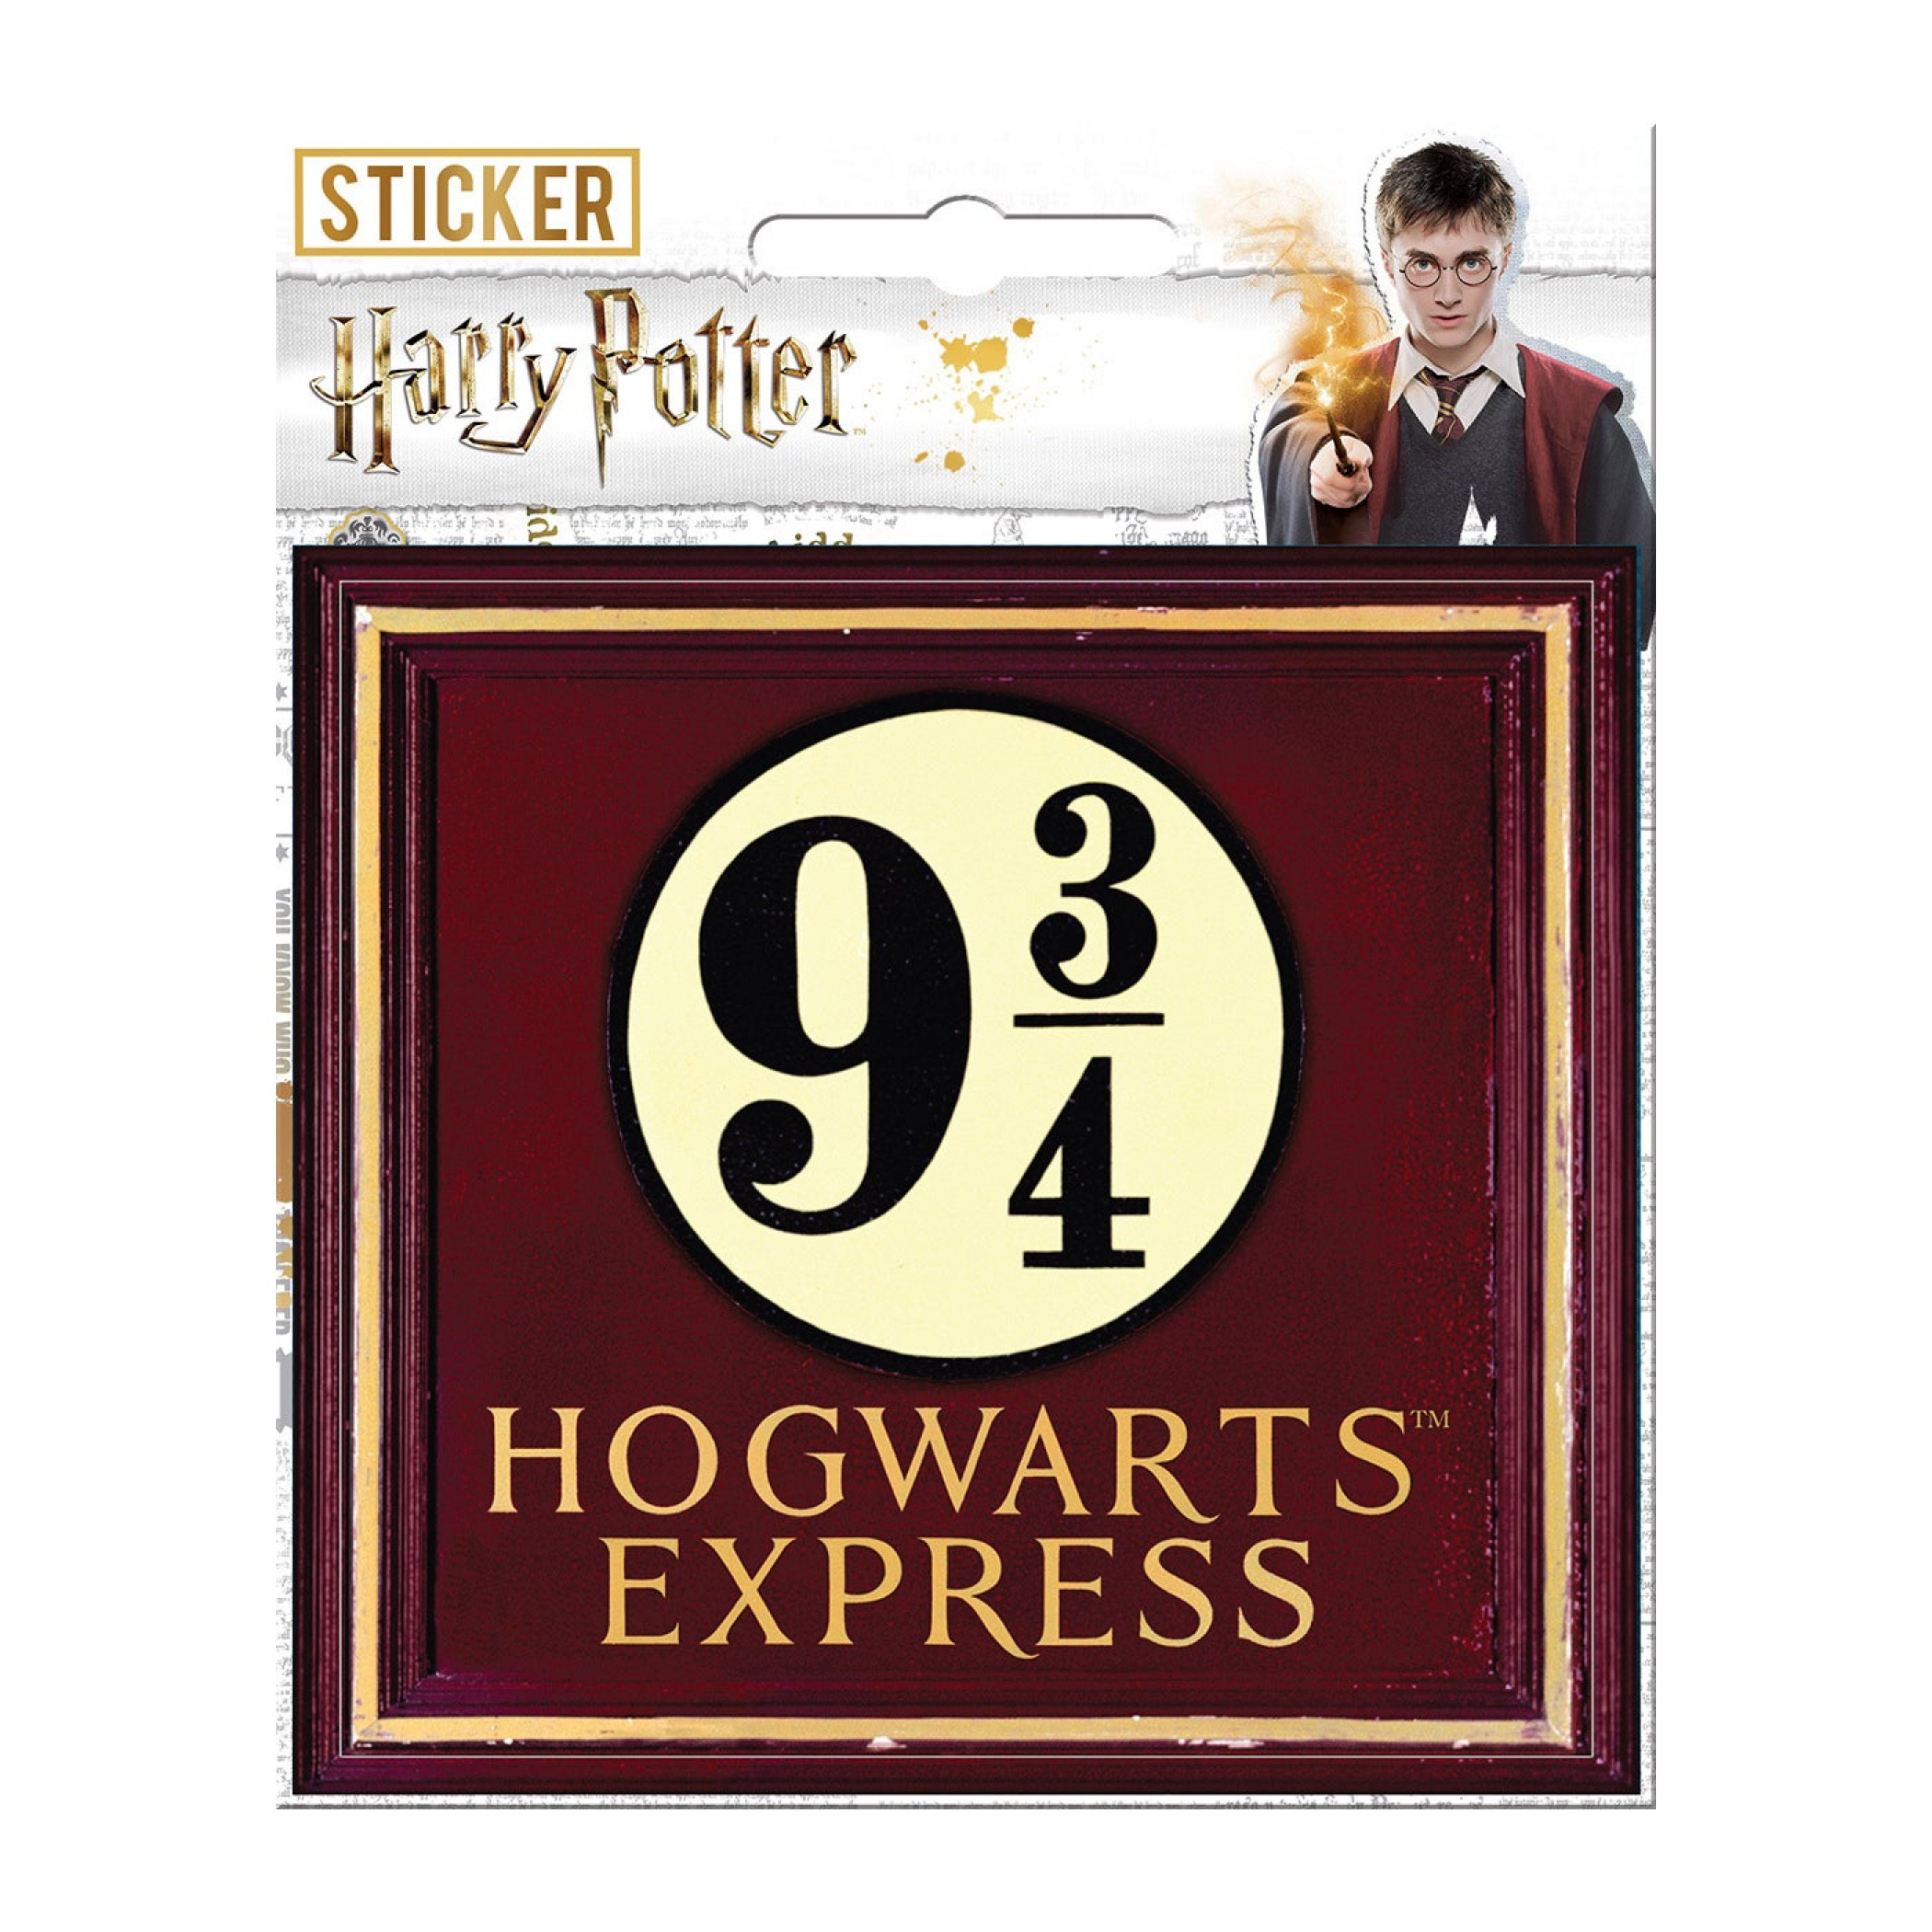 Harry Potter Hogwarts Express Platform 9 3/4 Sticker